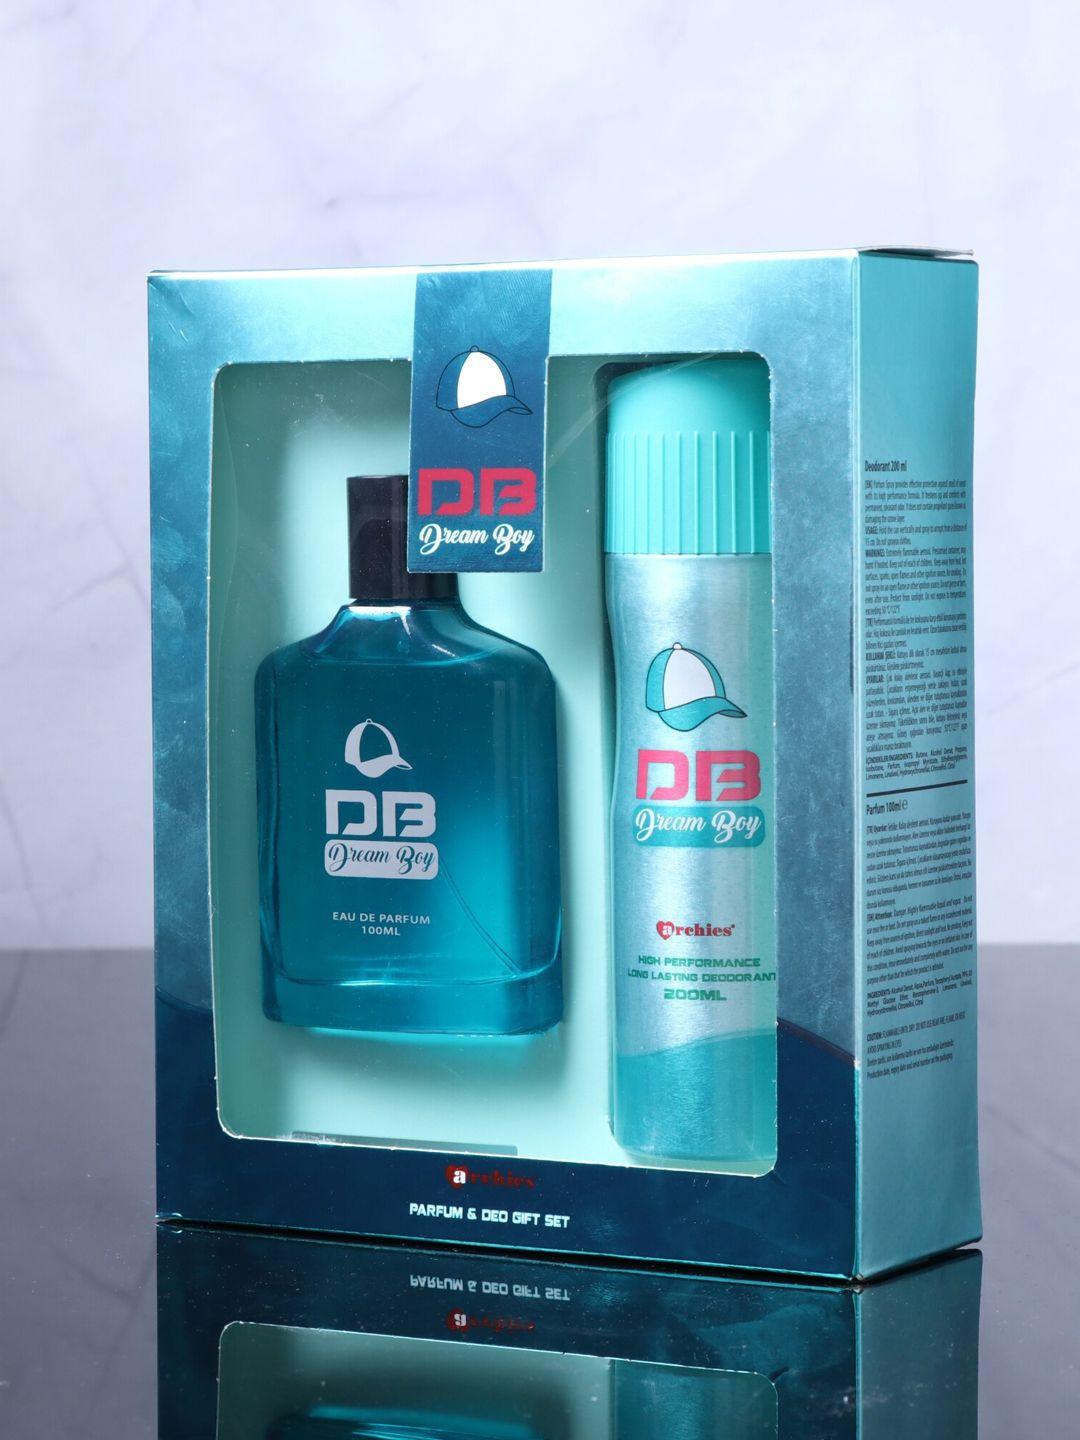 archies men original dream boy perfume-100ml and deo-200ml gift set